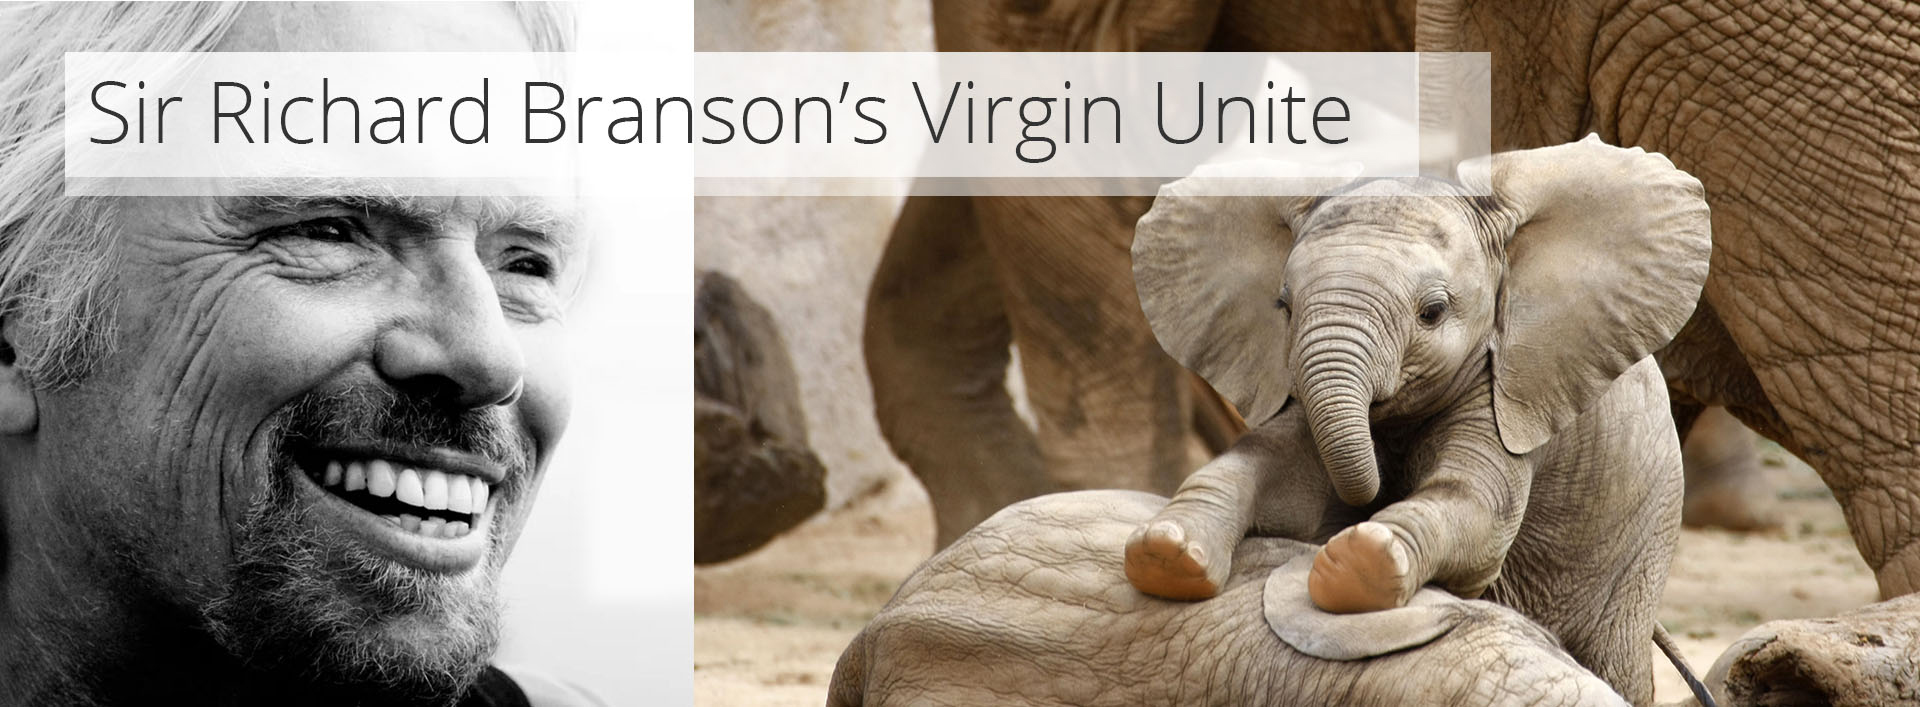 Sir Richard Branson's Virgin Unite